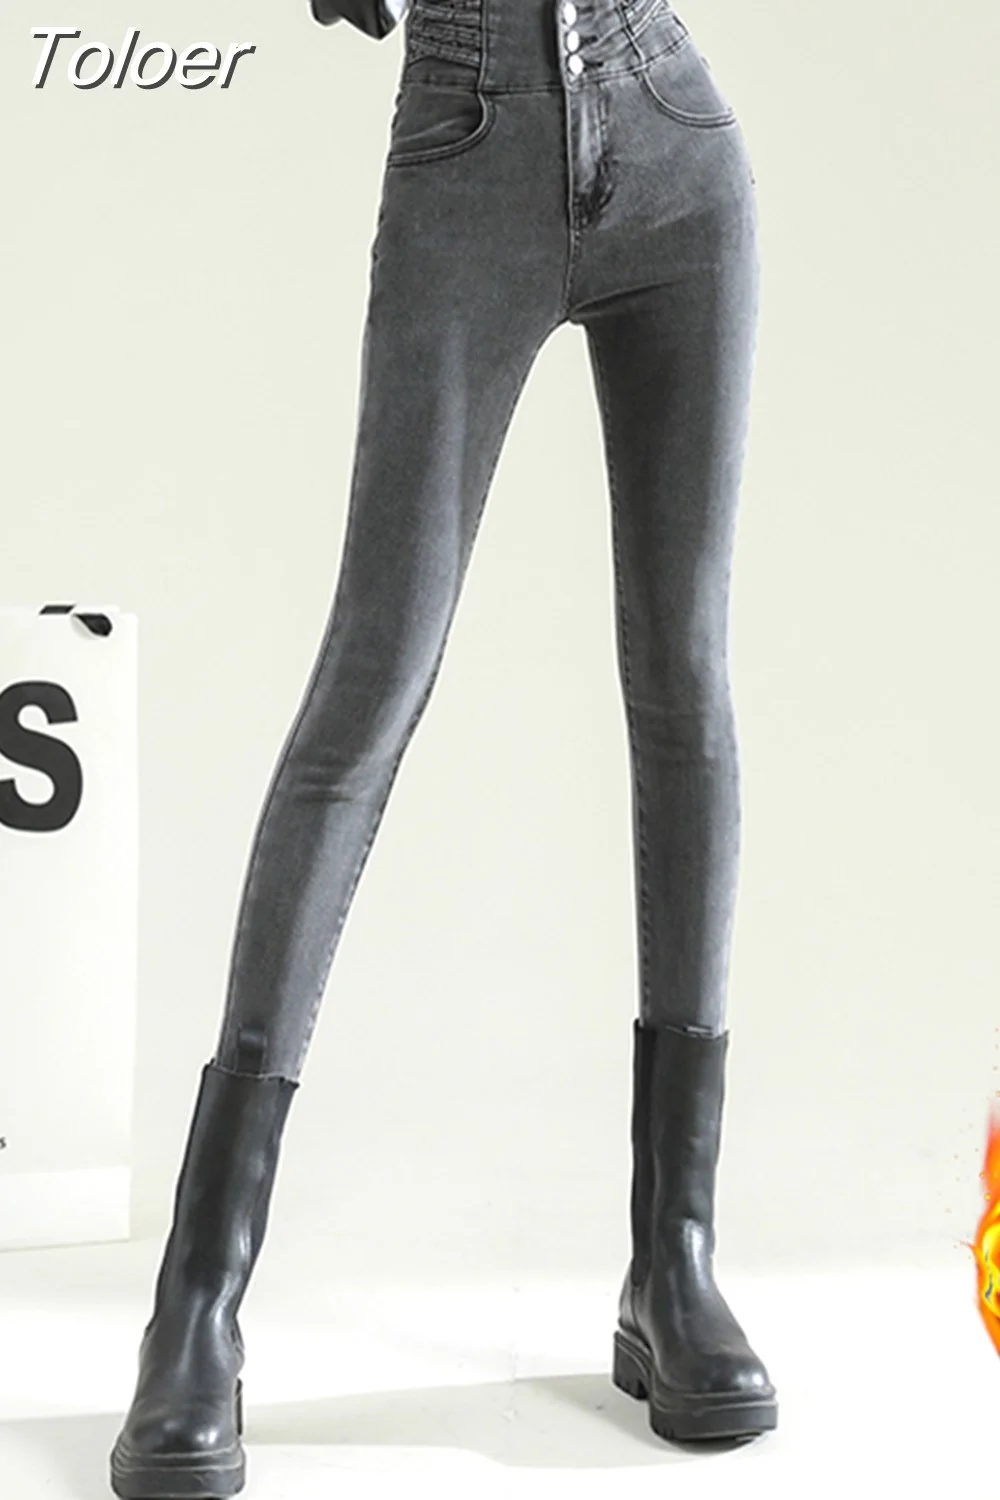 Toloer Fleece Warm New Fashion Wild Versatile Jeans Women's Skinny Y2K Skinny High Quality Black Stretch Pencil Pants Commuter